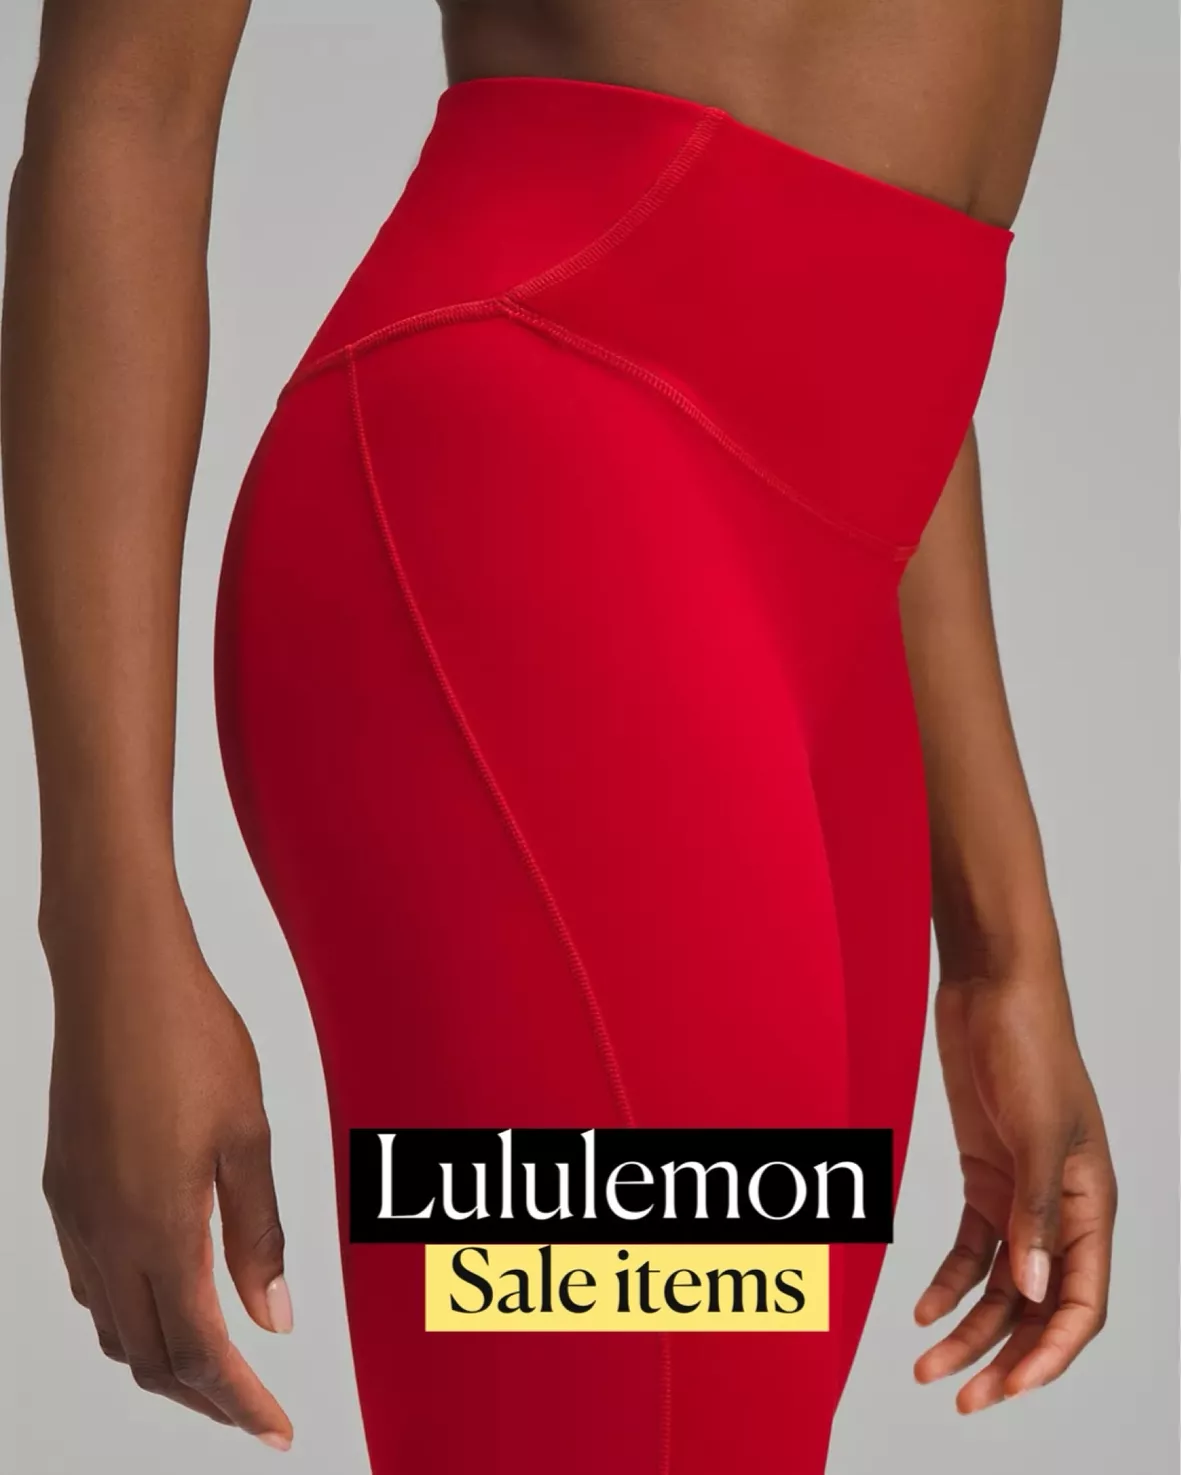 lululemon - Tight Stuff Leggings on Designer Wardrobe